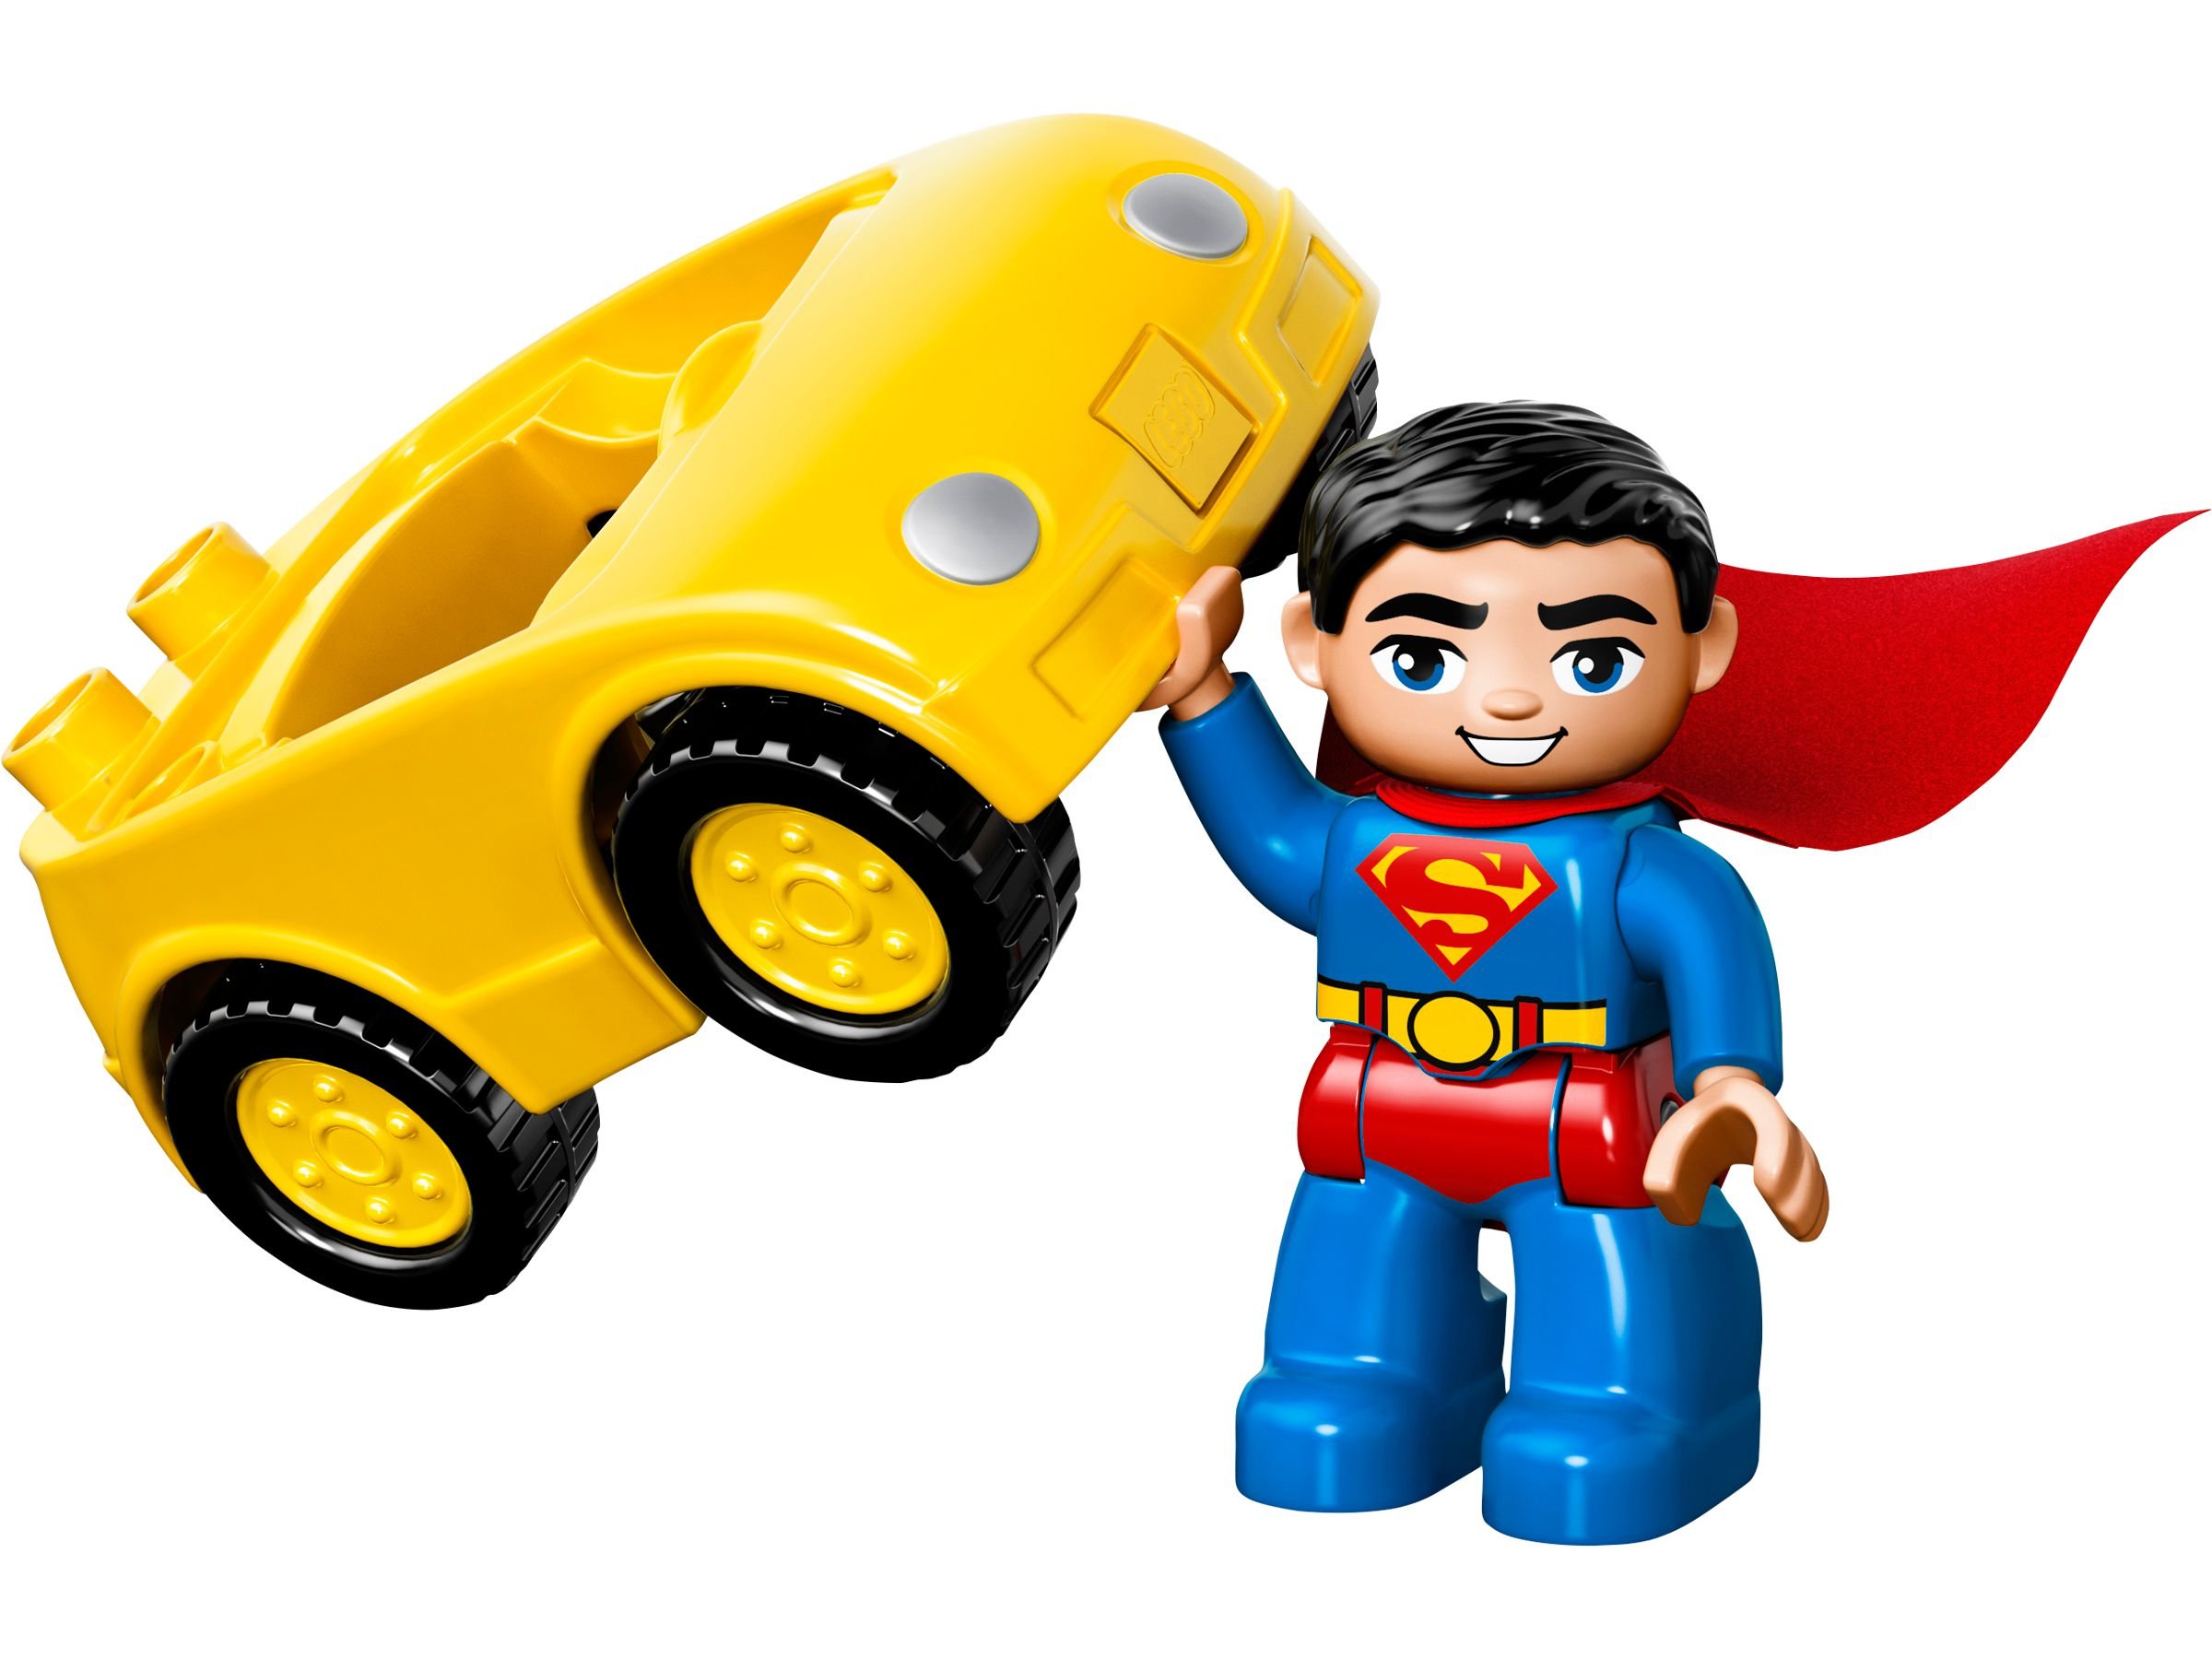 LEGO Duplo 10543 Supermans™ Rettungseinsatz LEGO_10543_alt3.jpg